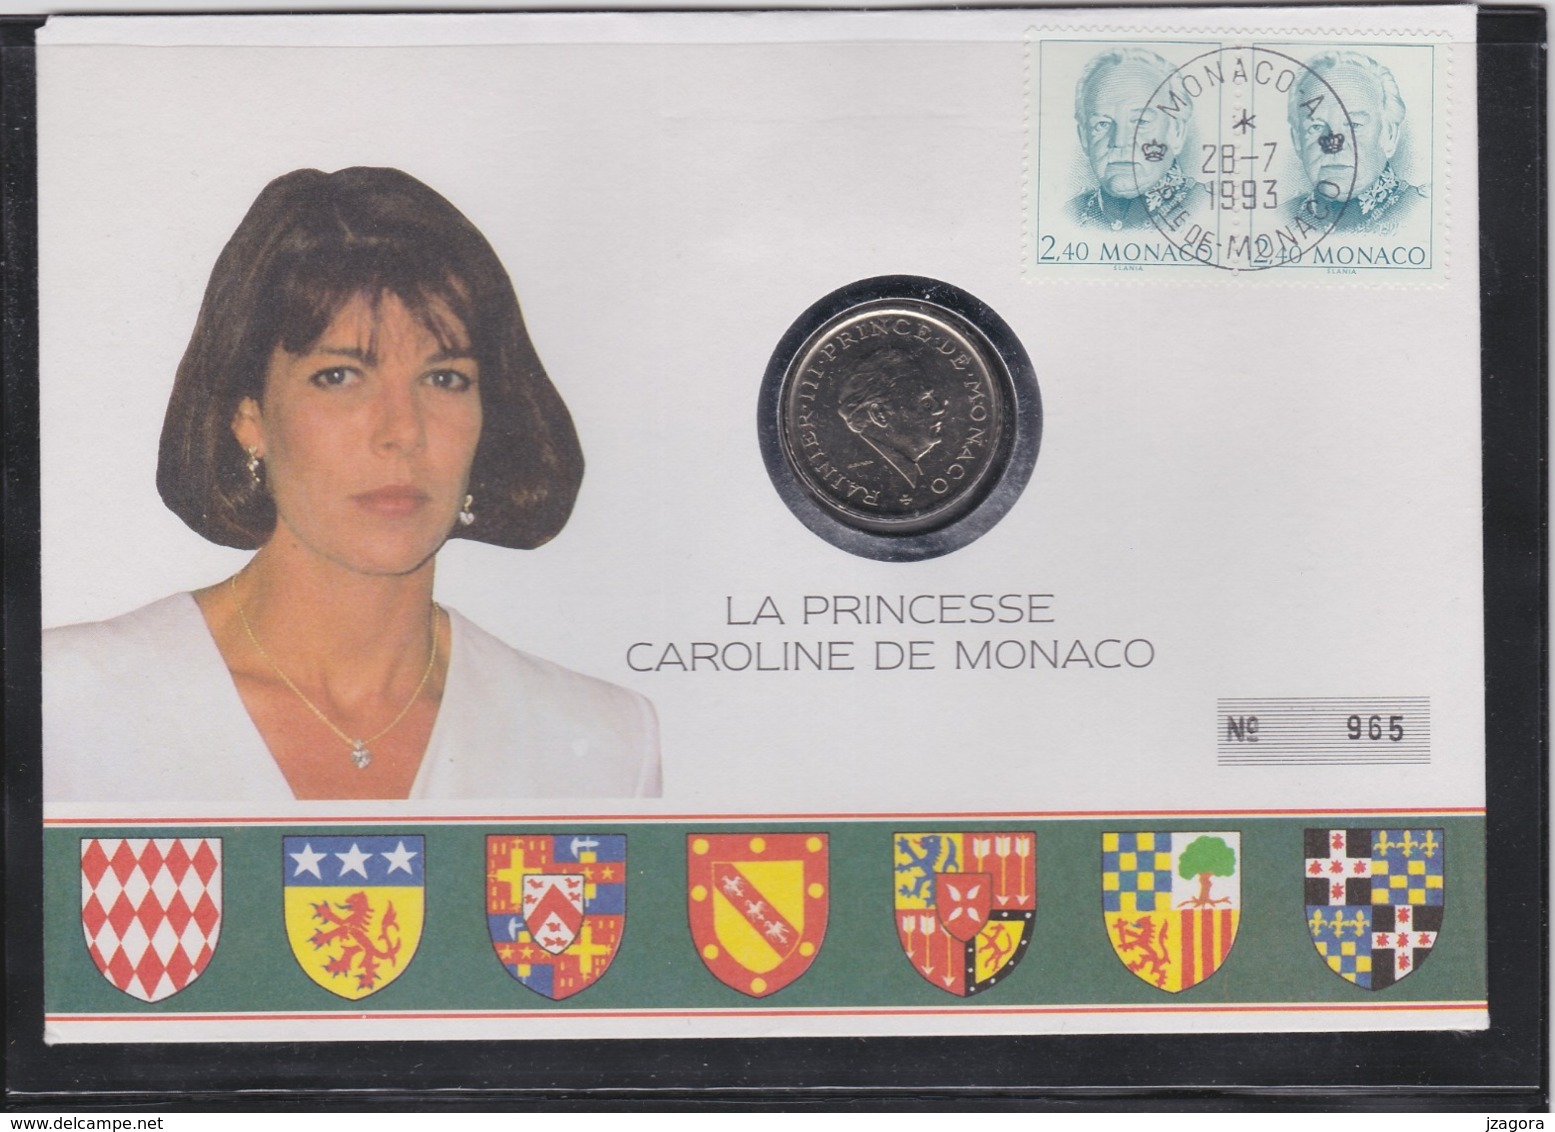 PRINCESSE GRACE COMMEMORATIVE COIN LETTER - MONACO 1993 Slania Engraved Stamp - Royalties, Royals